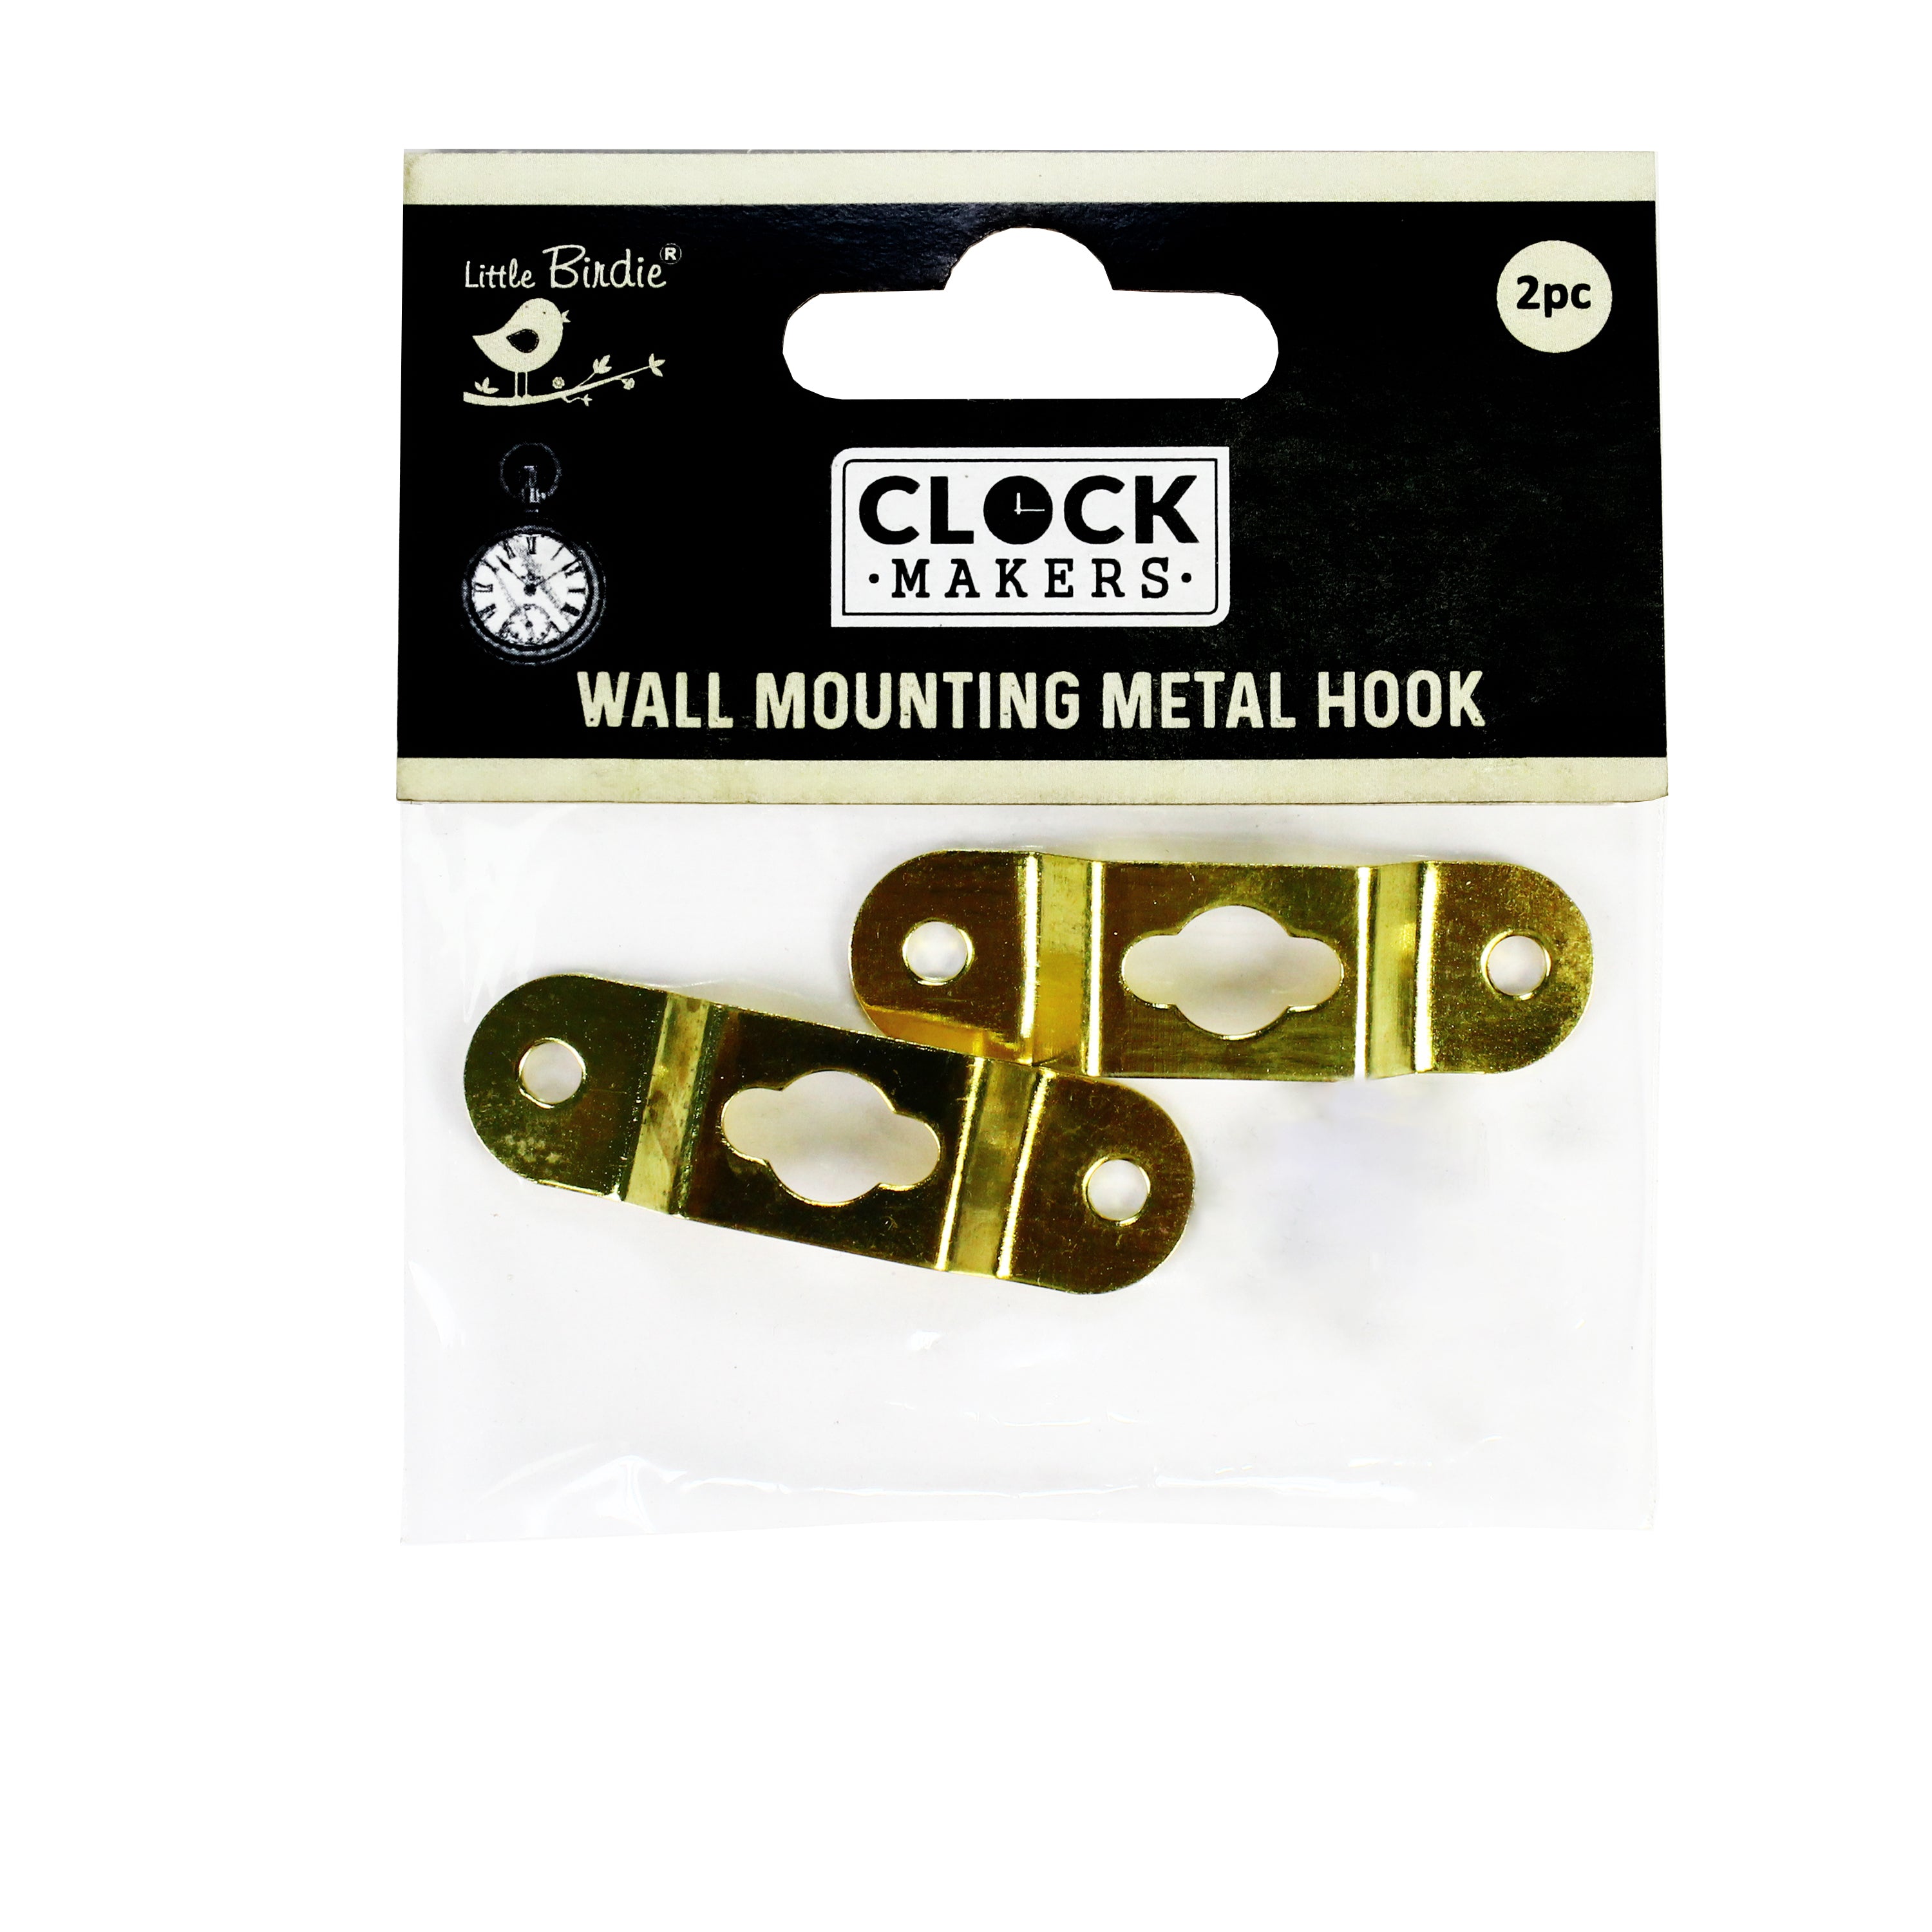 Wall Mounting Metal Hooks Round Gold 2Pc Pbhc Lb